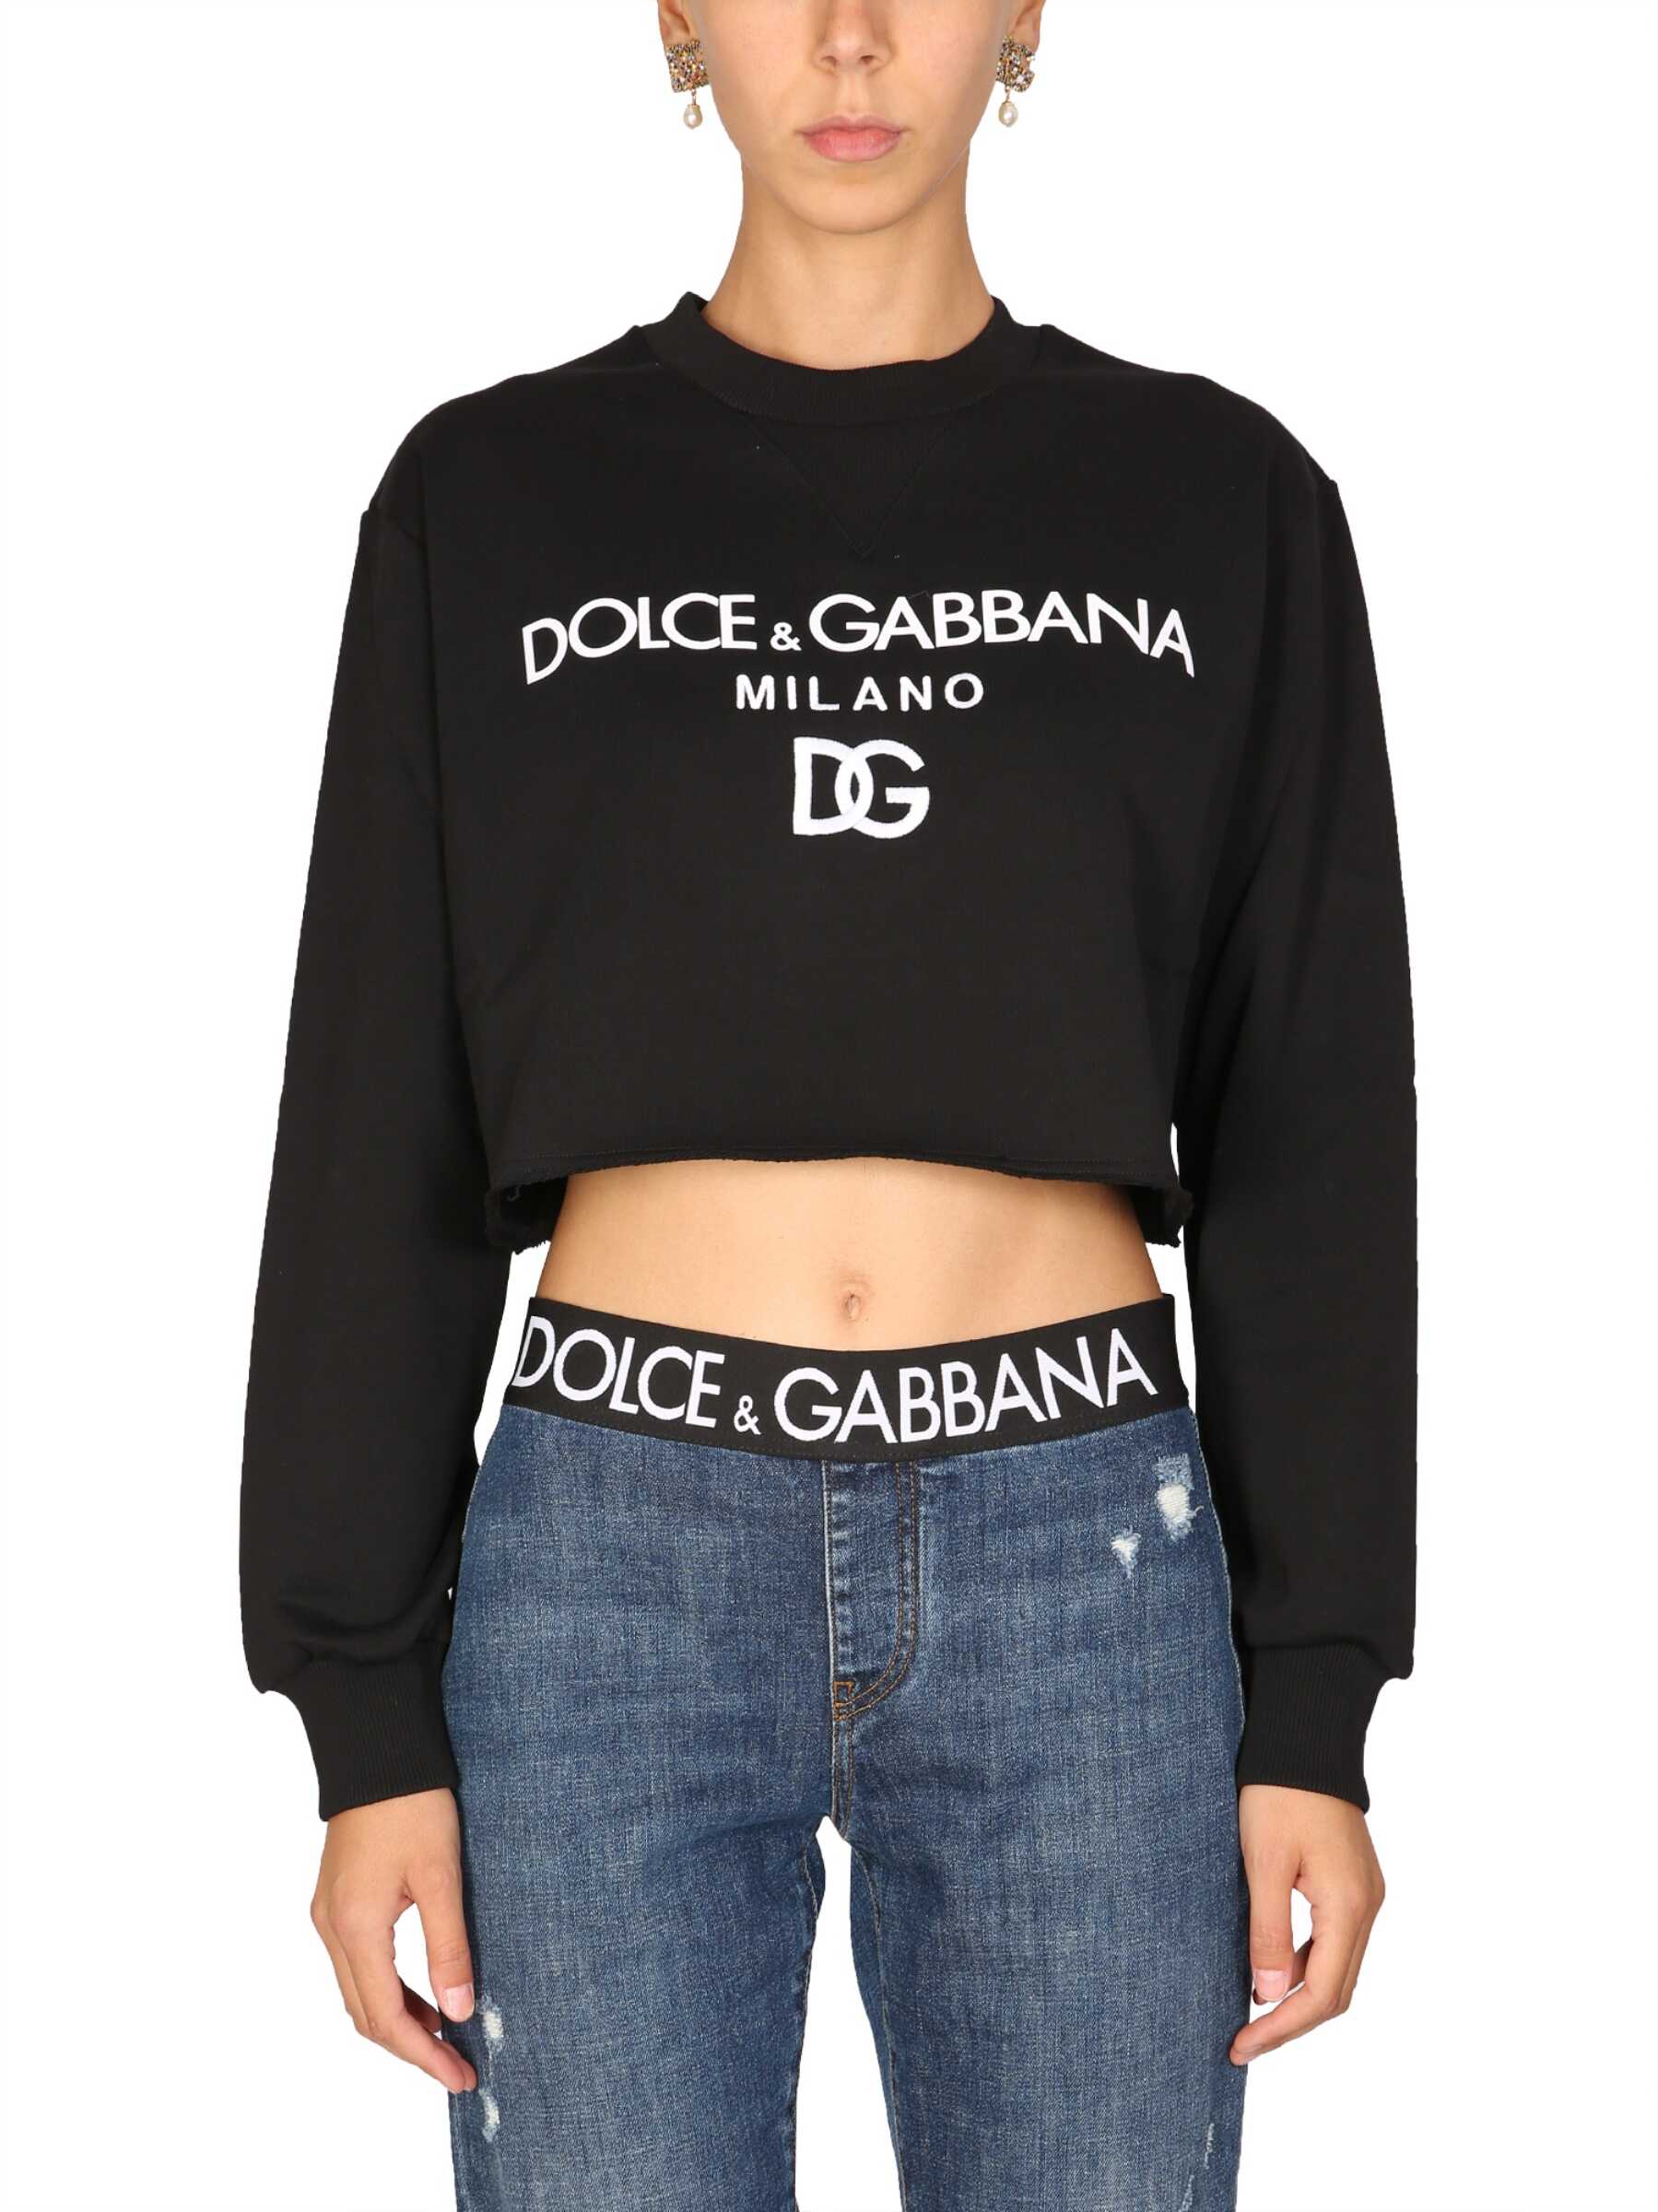 Dolce & Gabbana Dolce & Gabbana Print Sweatshirt BLACK